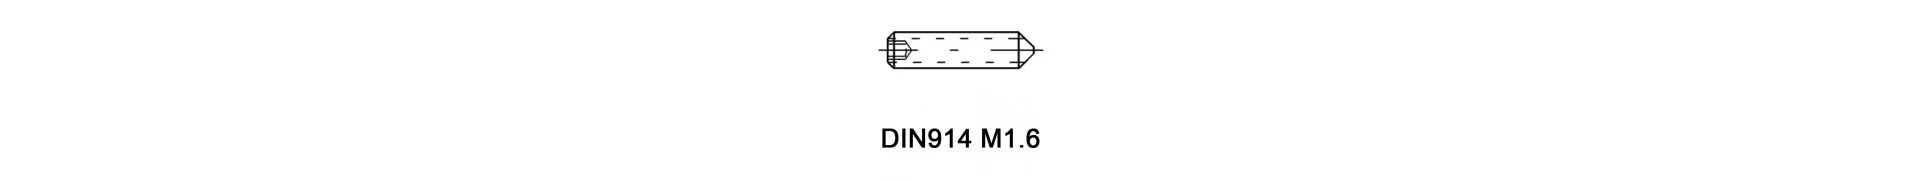 DIN914 M1.6